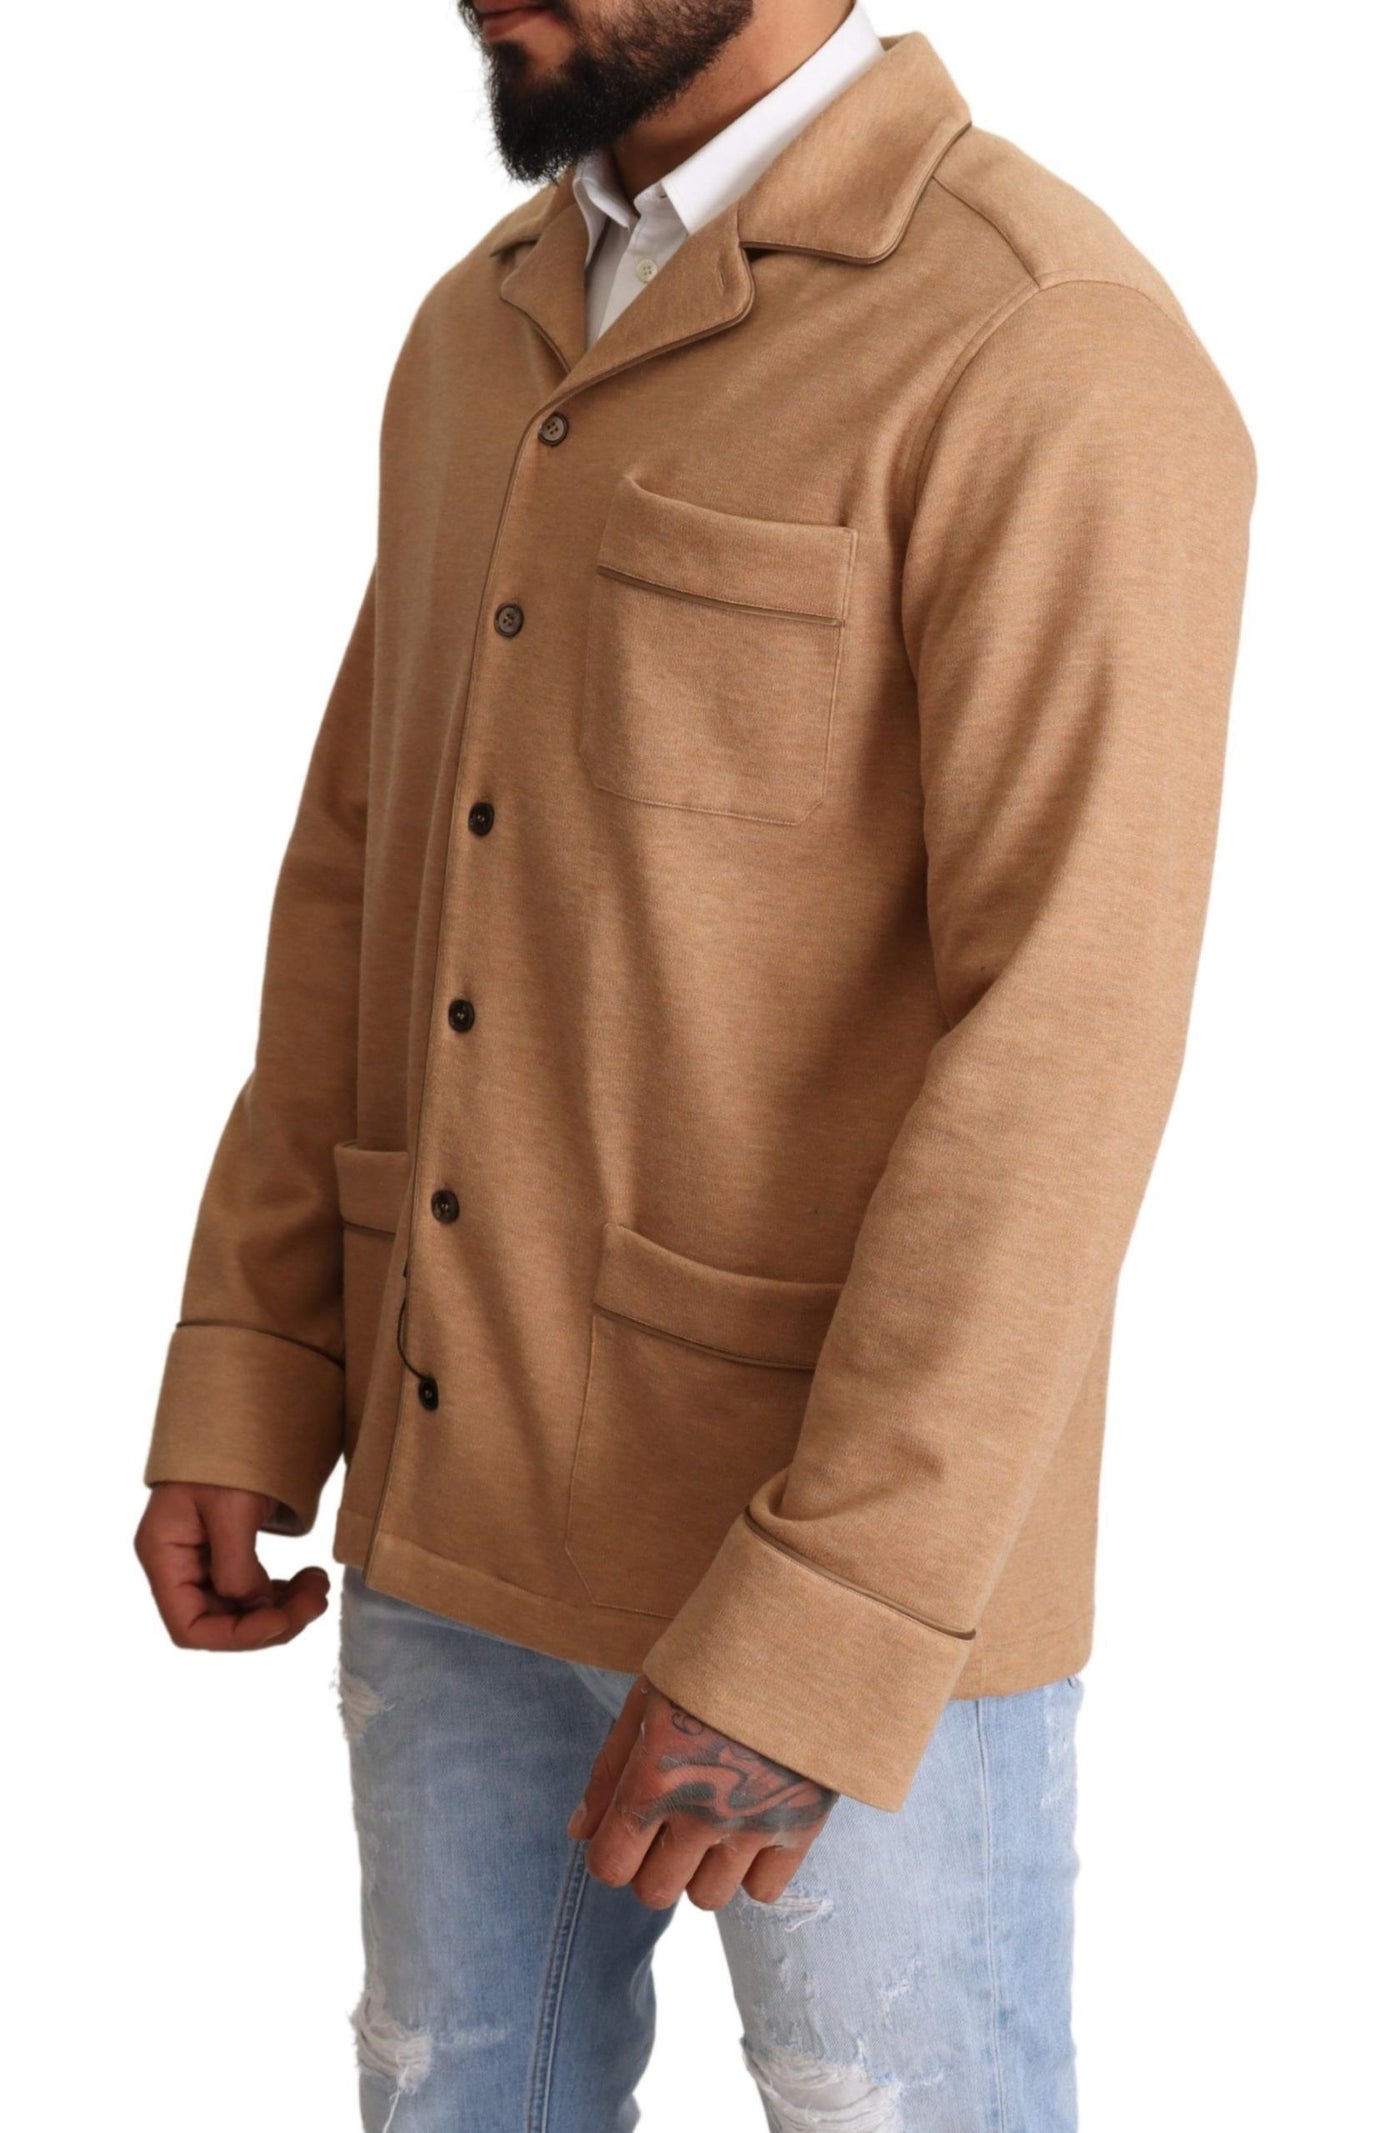 Dolce & Gabbana Brown Cotton Button Collared Coat Jacket